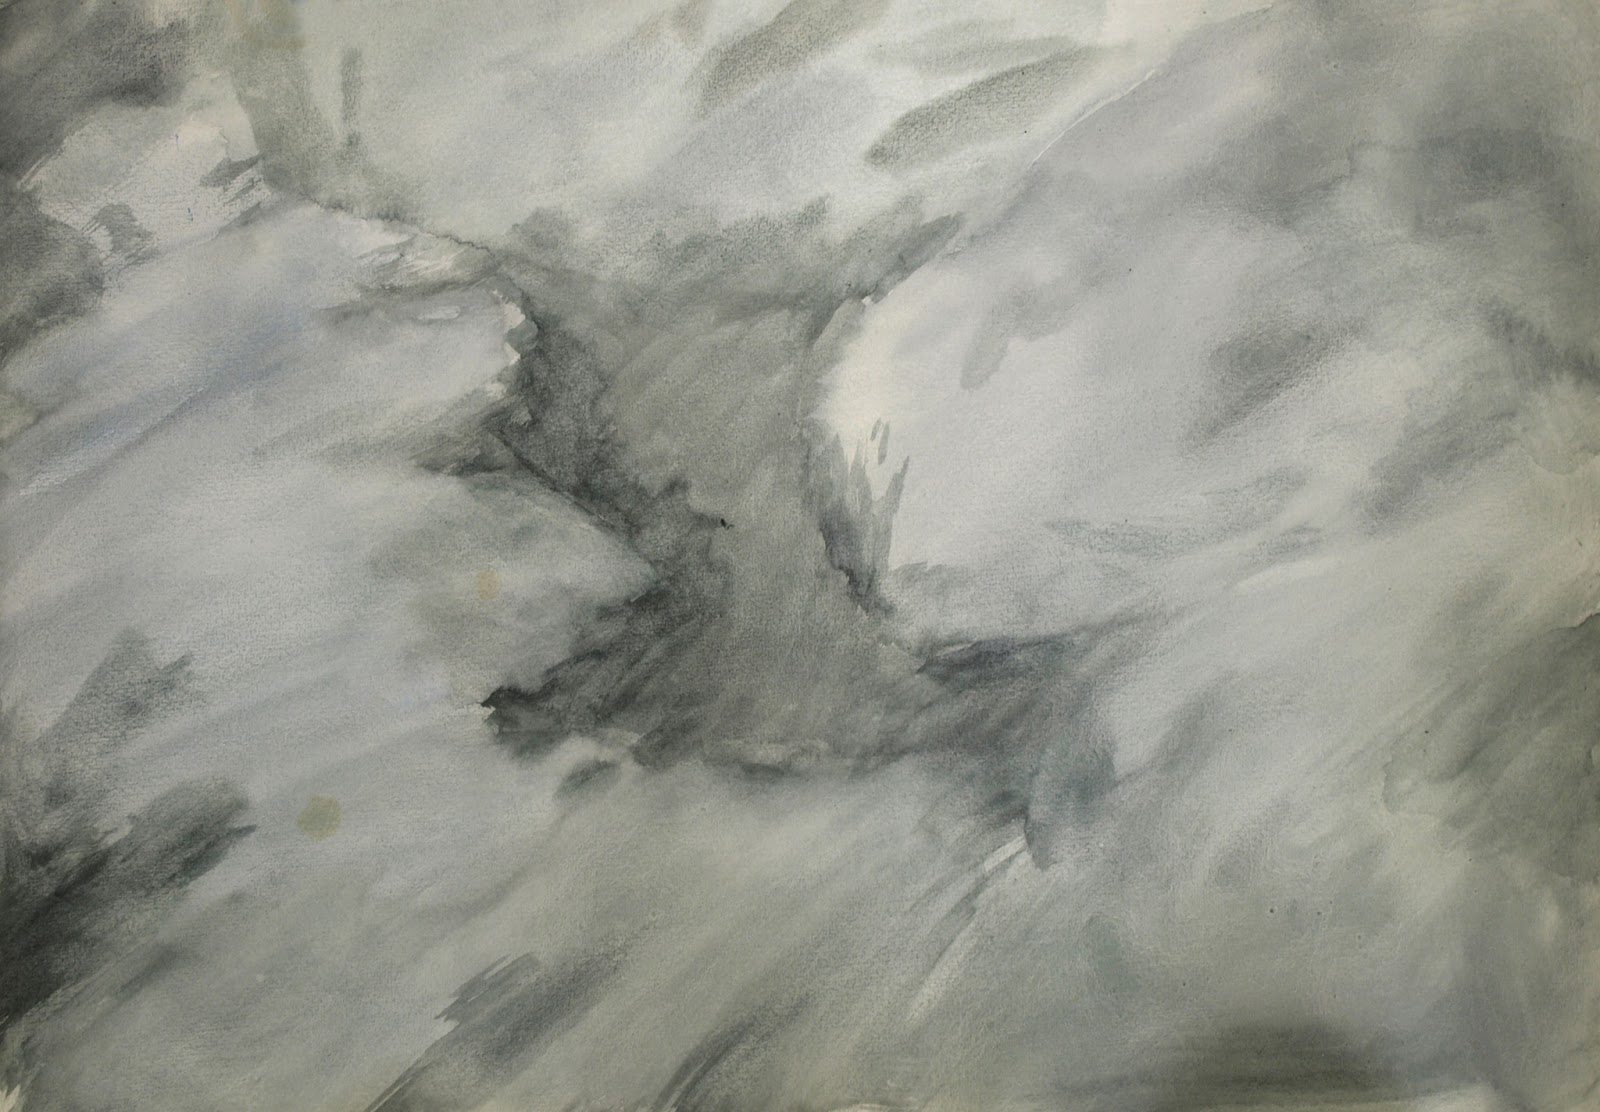 A3, aquarell on paper, 2013